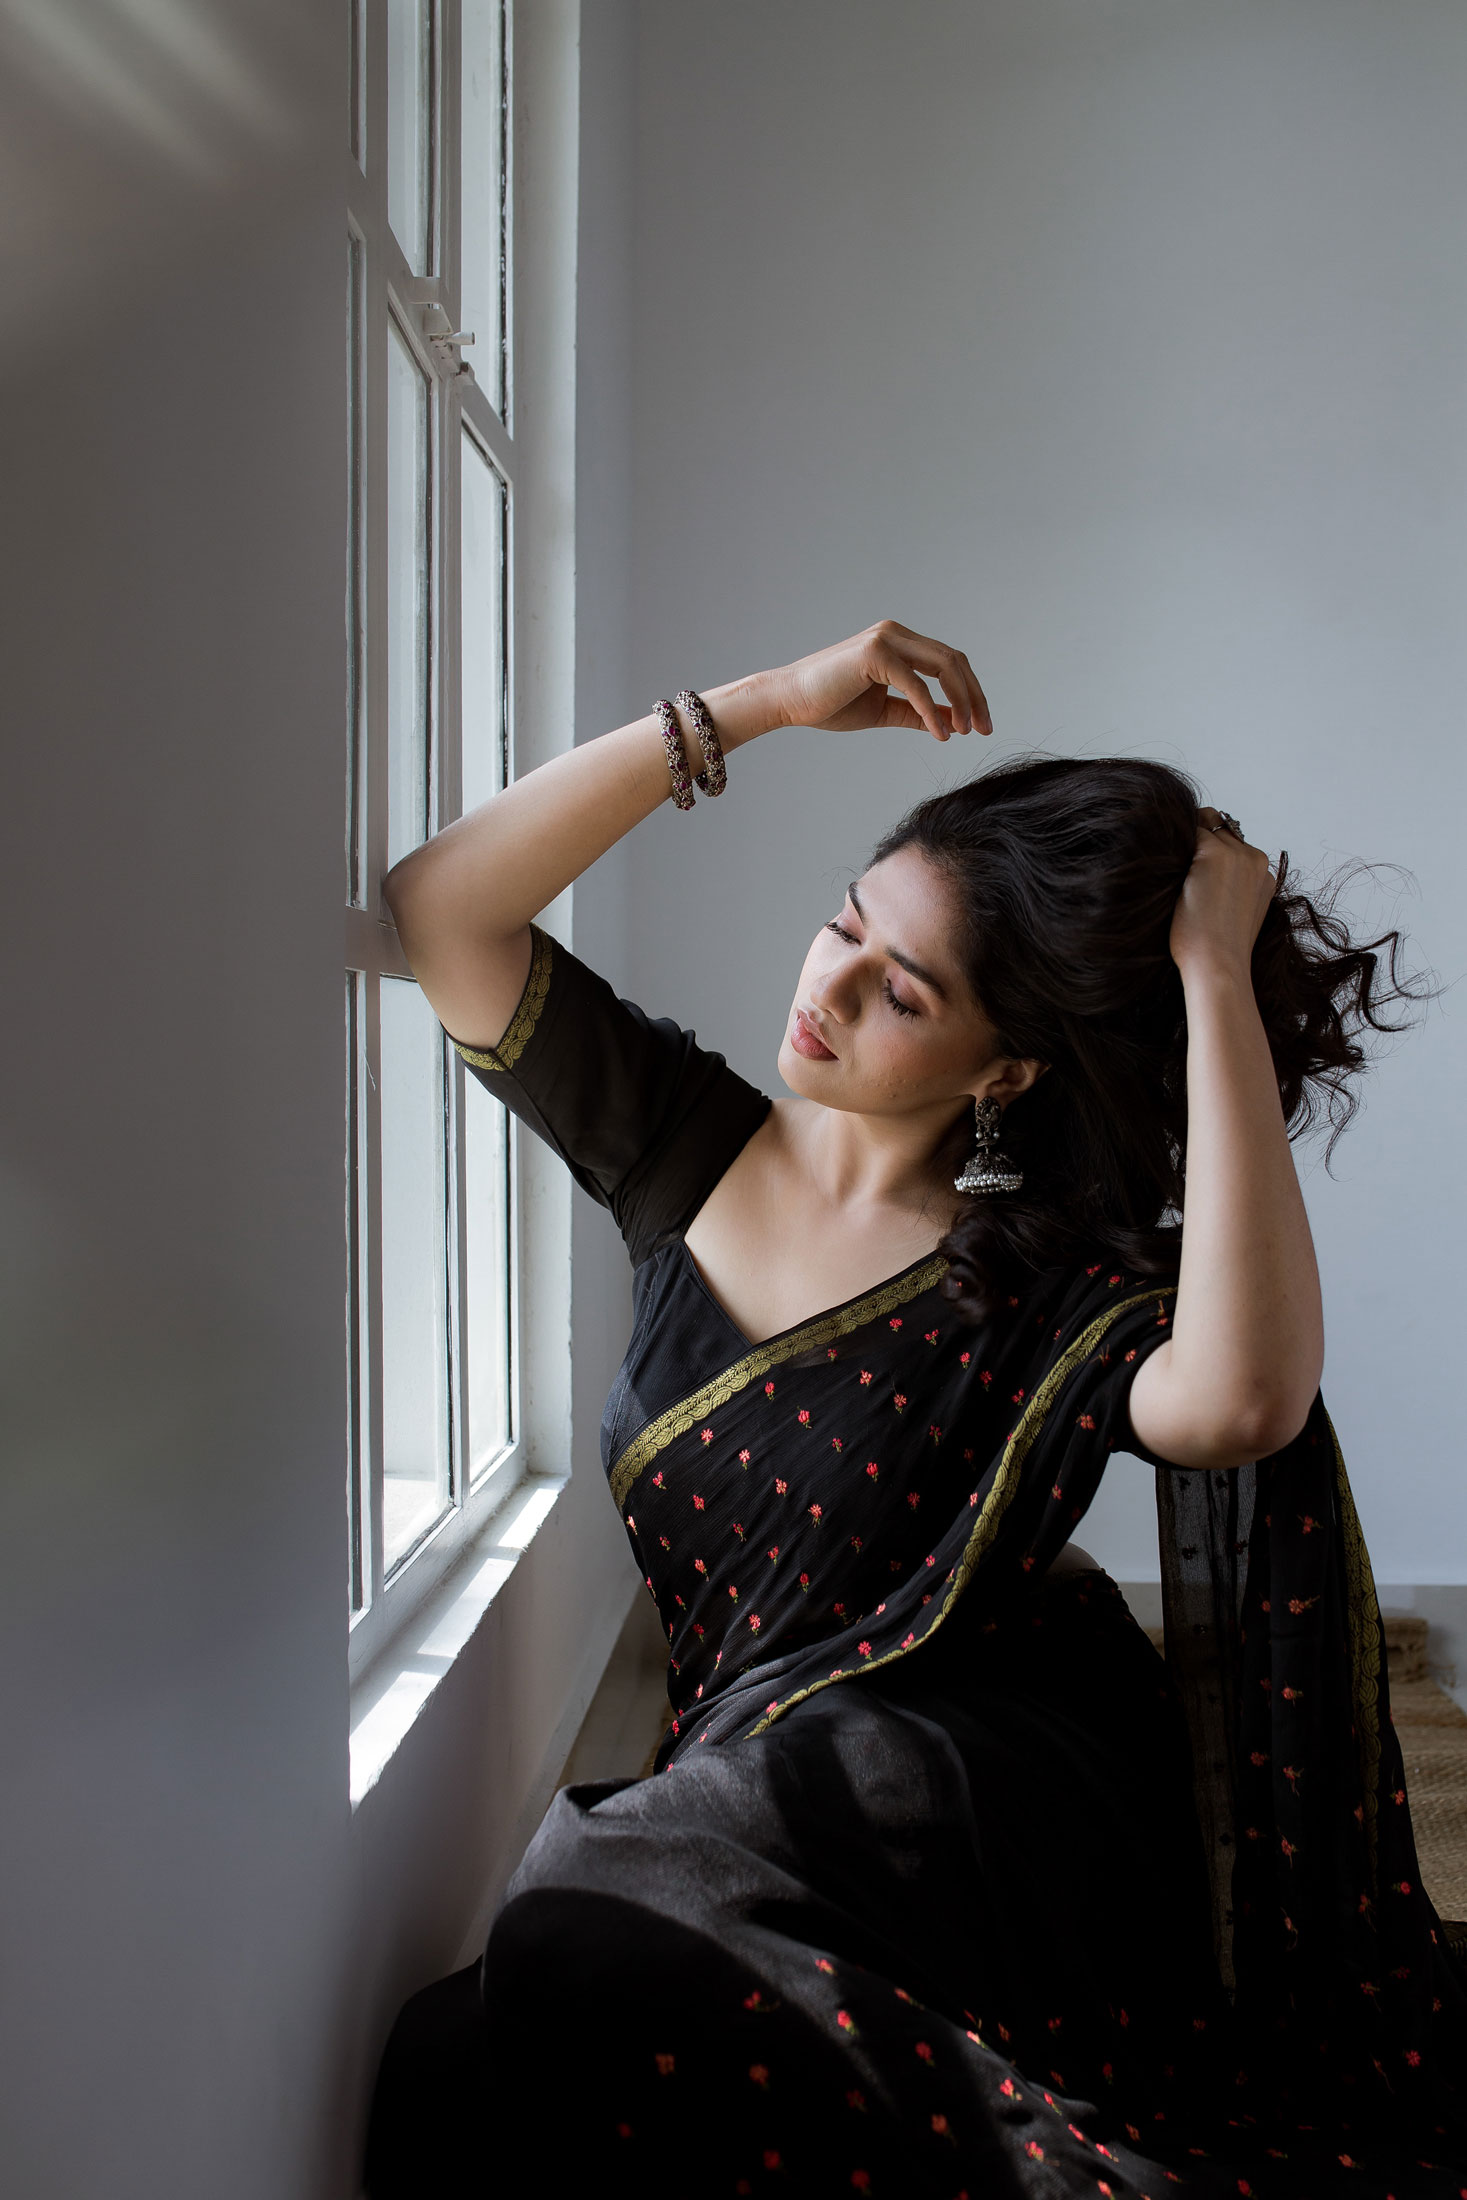 Pin by Bala Vuppala on Photography | Cotton saree blouse designs, Indian  photoshoot, Girl crush fashion